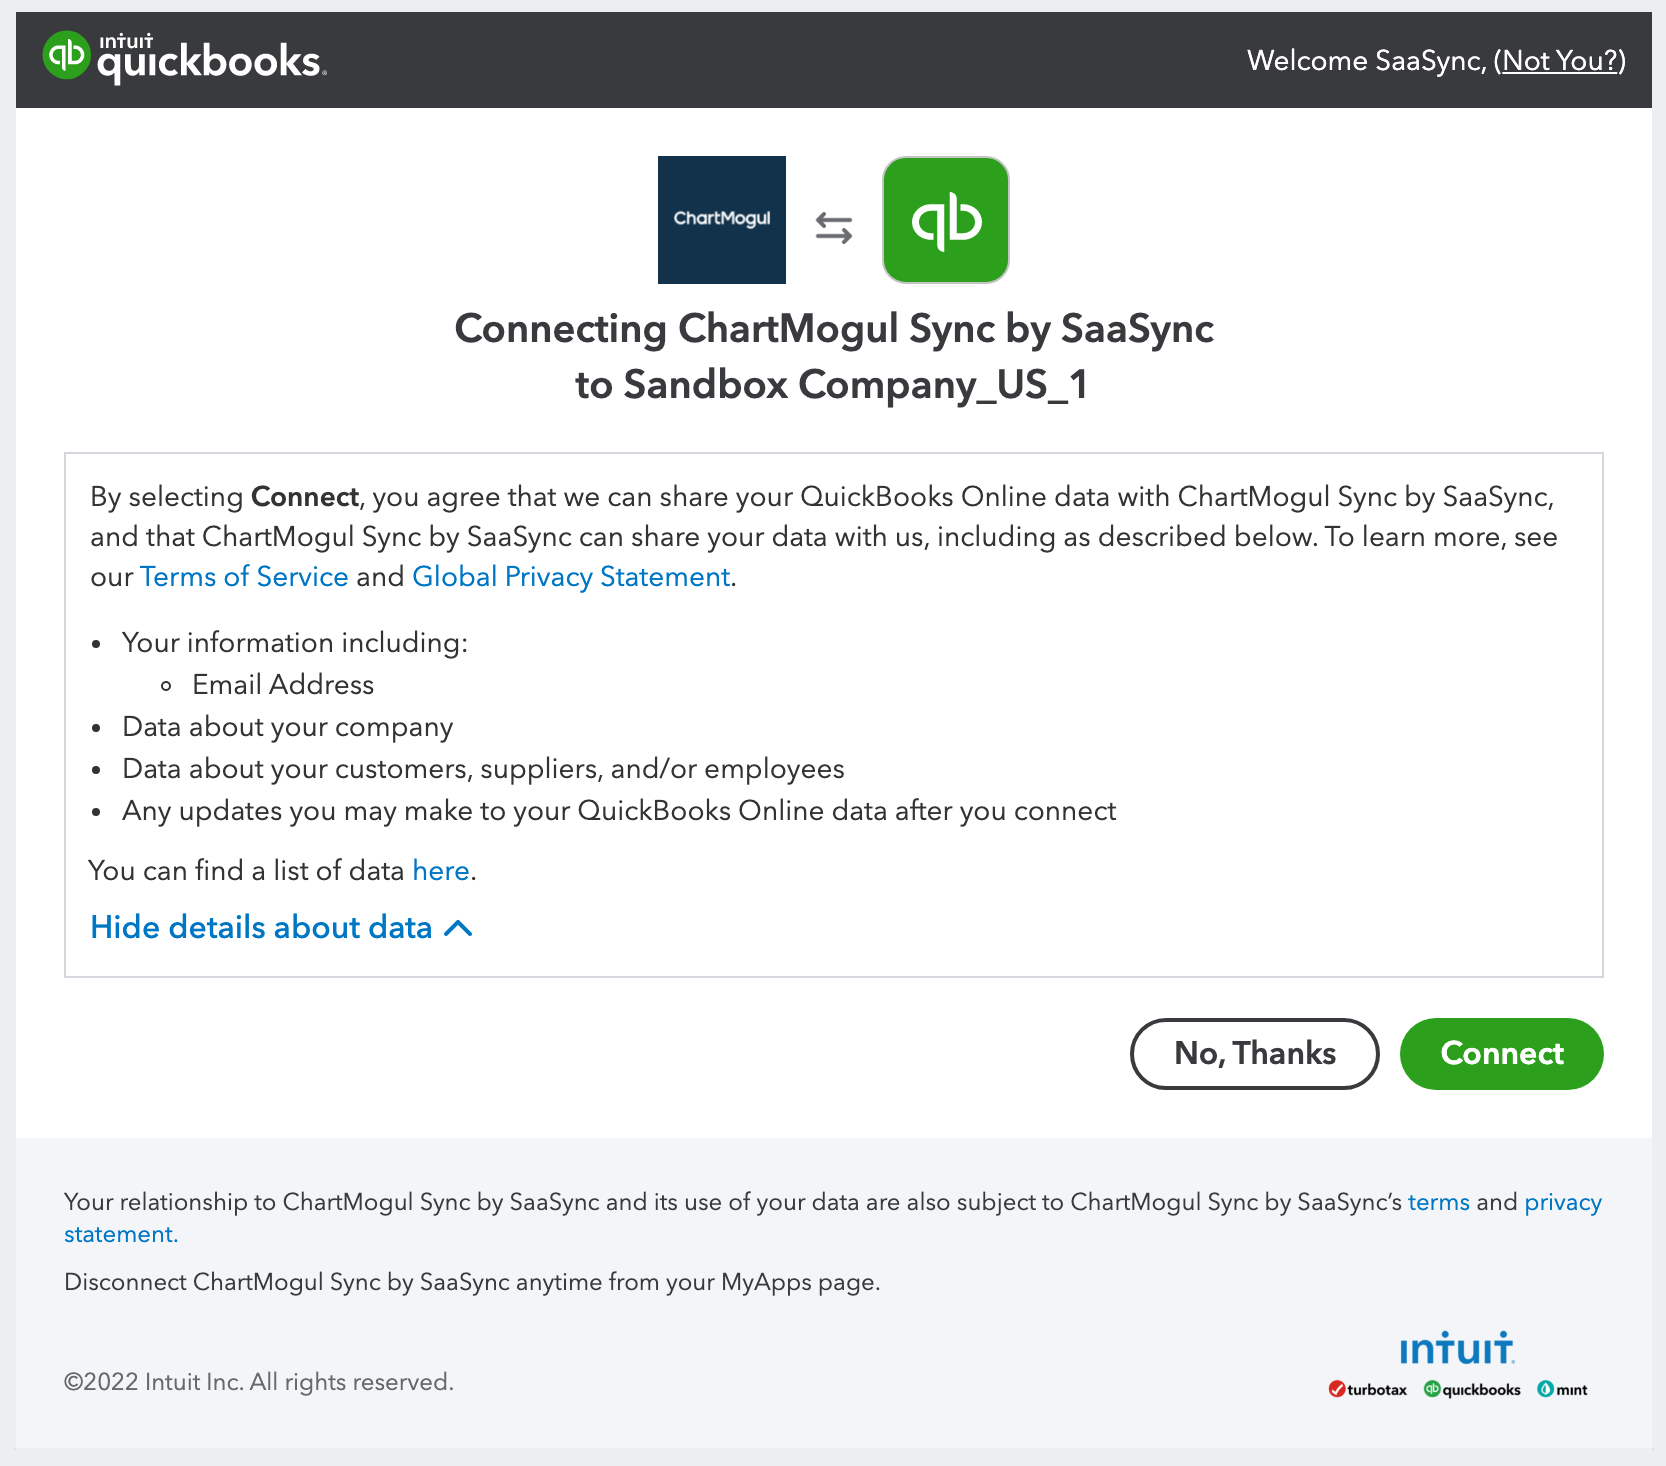 QuickBooks Online OAuth data sharing agreement